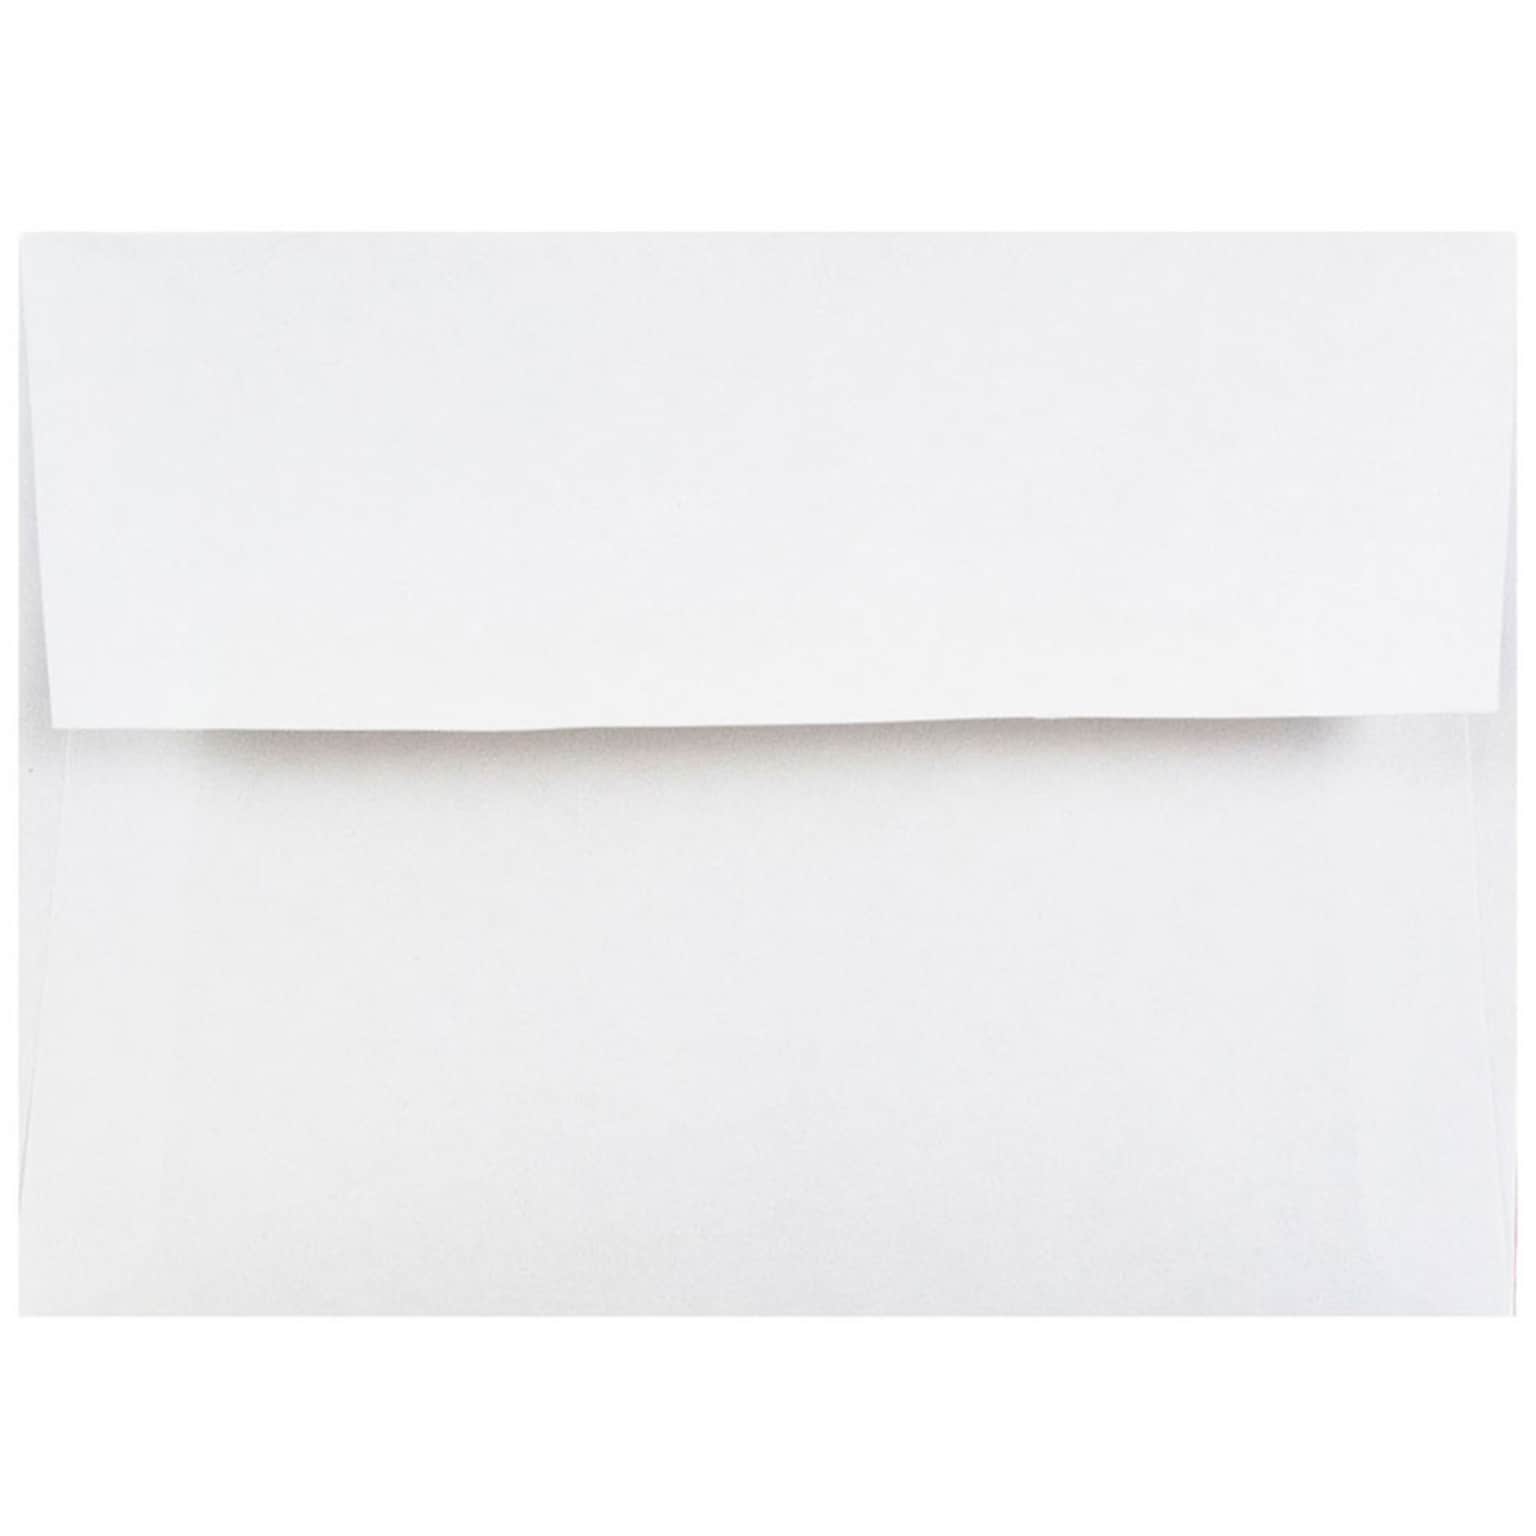 JAM Paper® 4Bar A1 Invitation Envelopes, 3.625 x 5.125, White, Bulk 250/Box (47385h250)